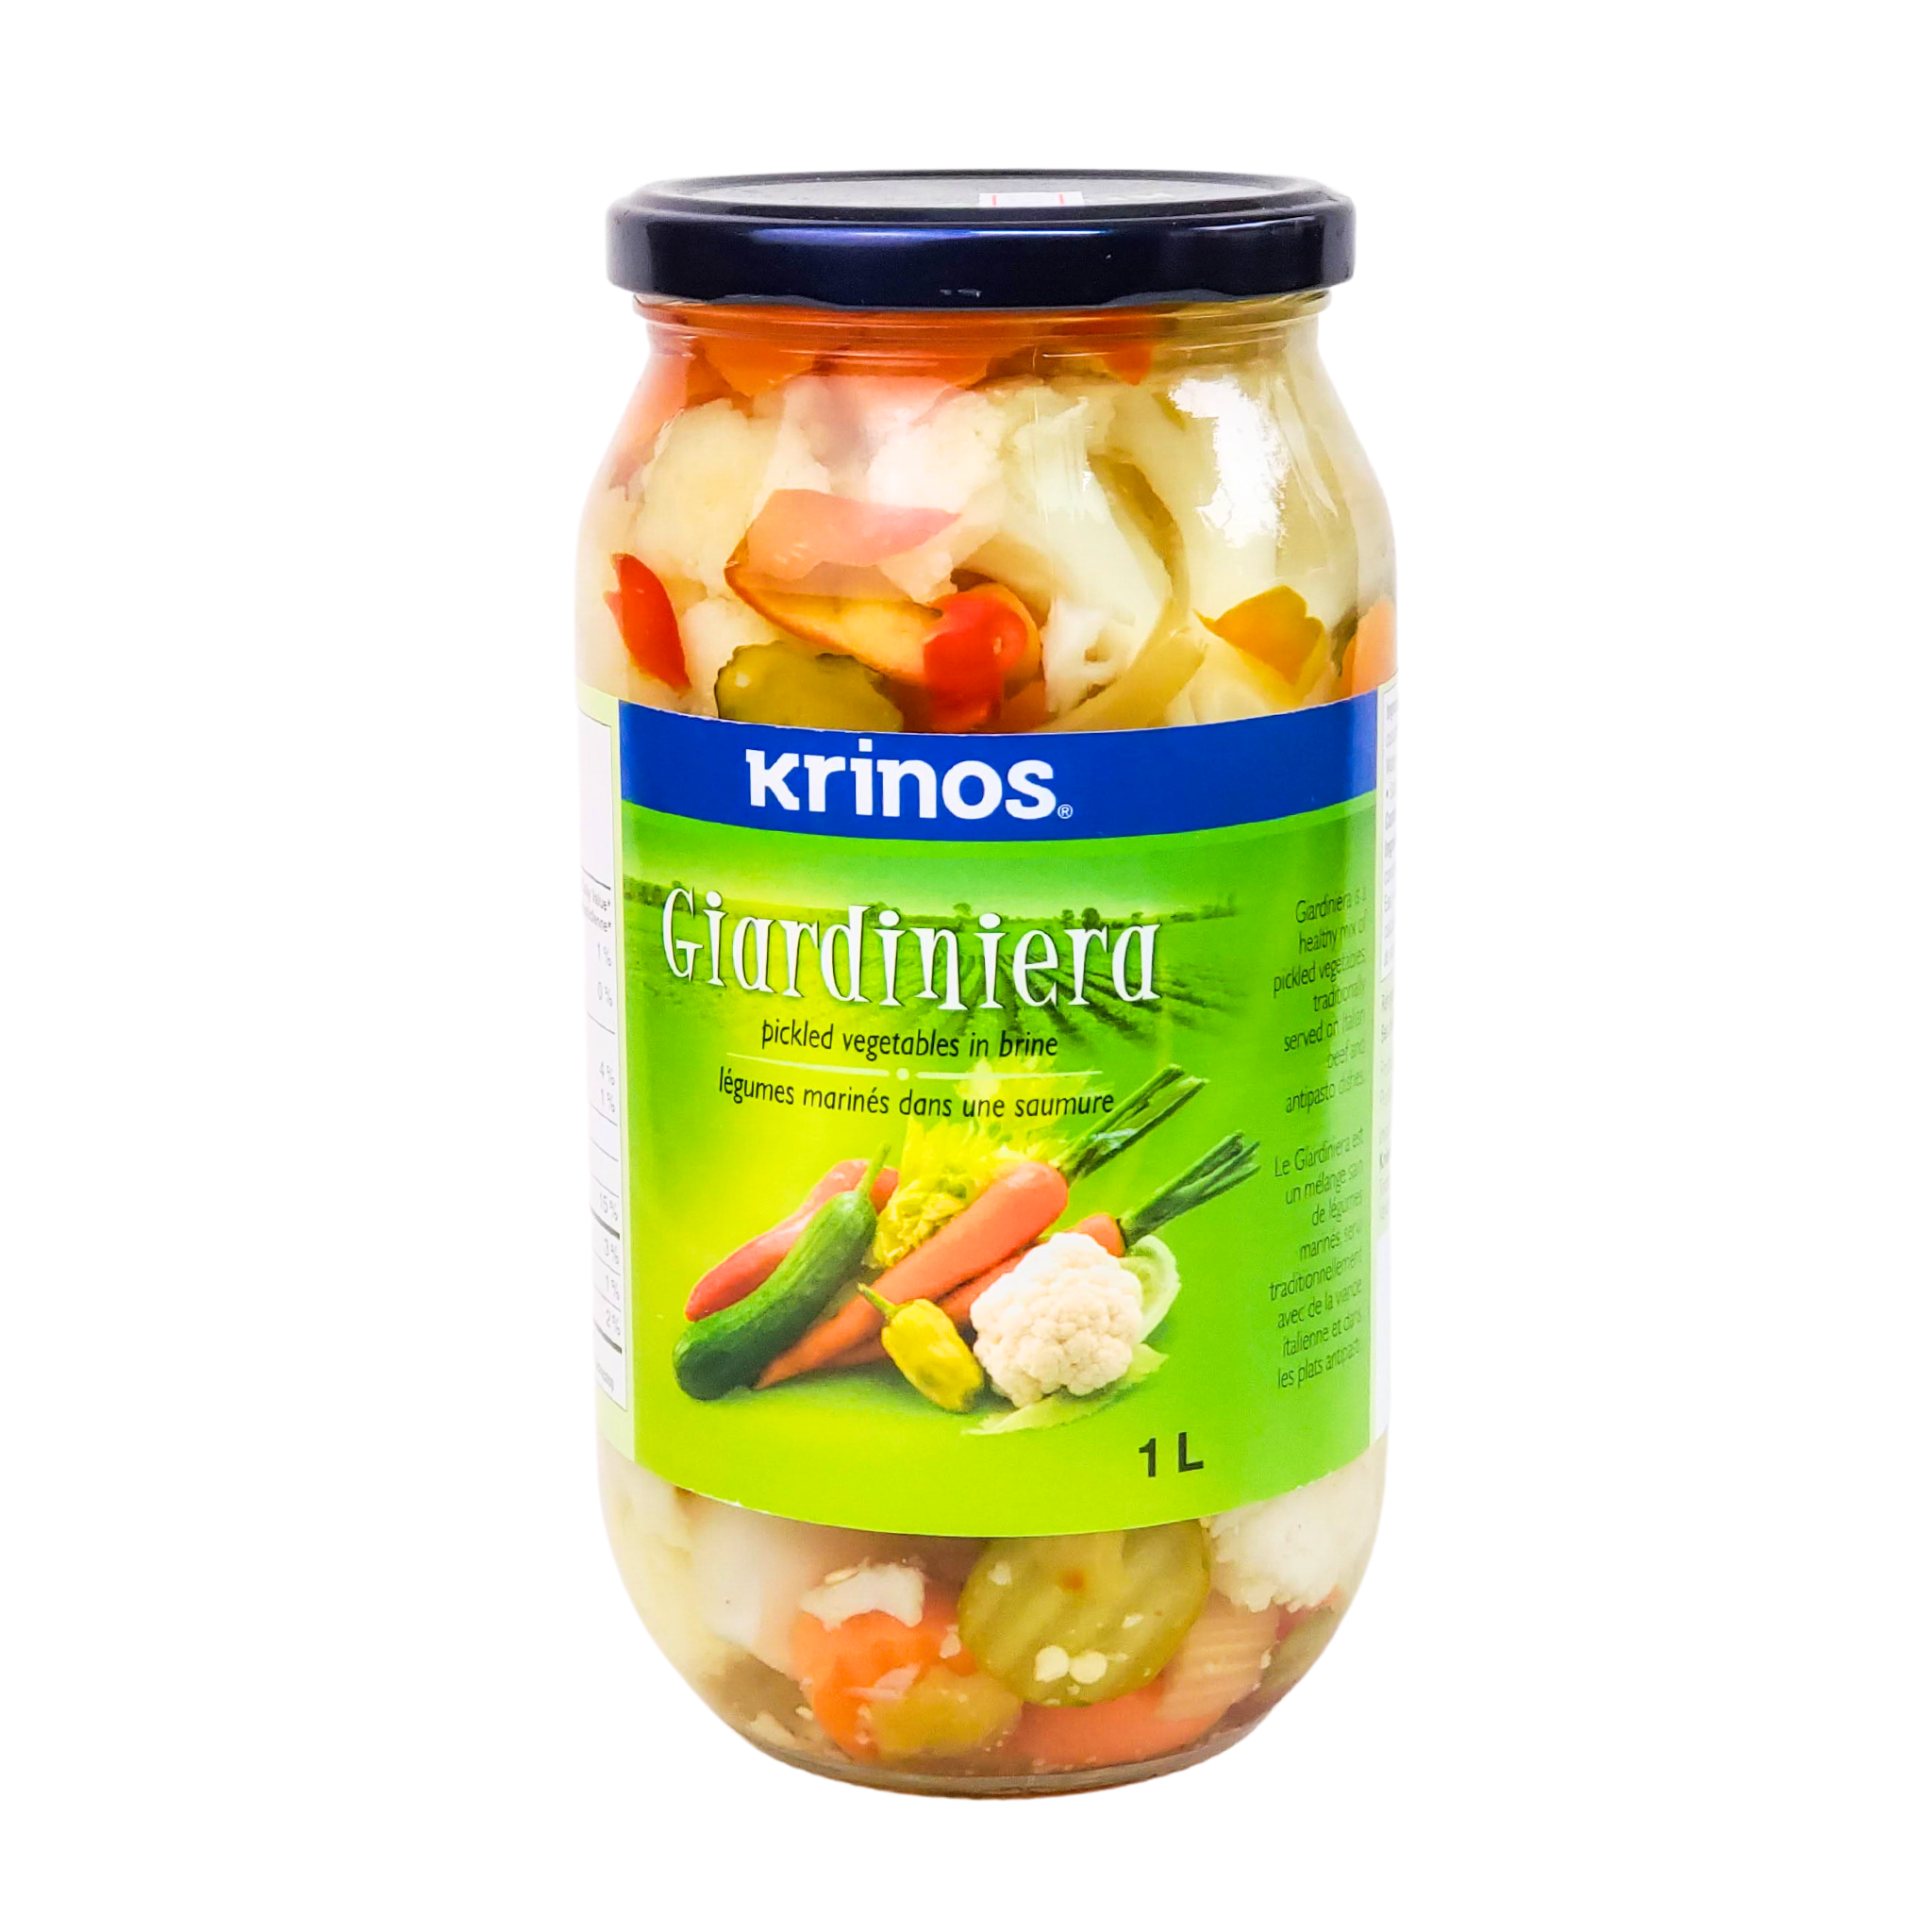 Krinos Giardiniera Pickled Vegetables in Brine 1L